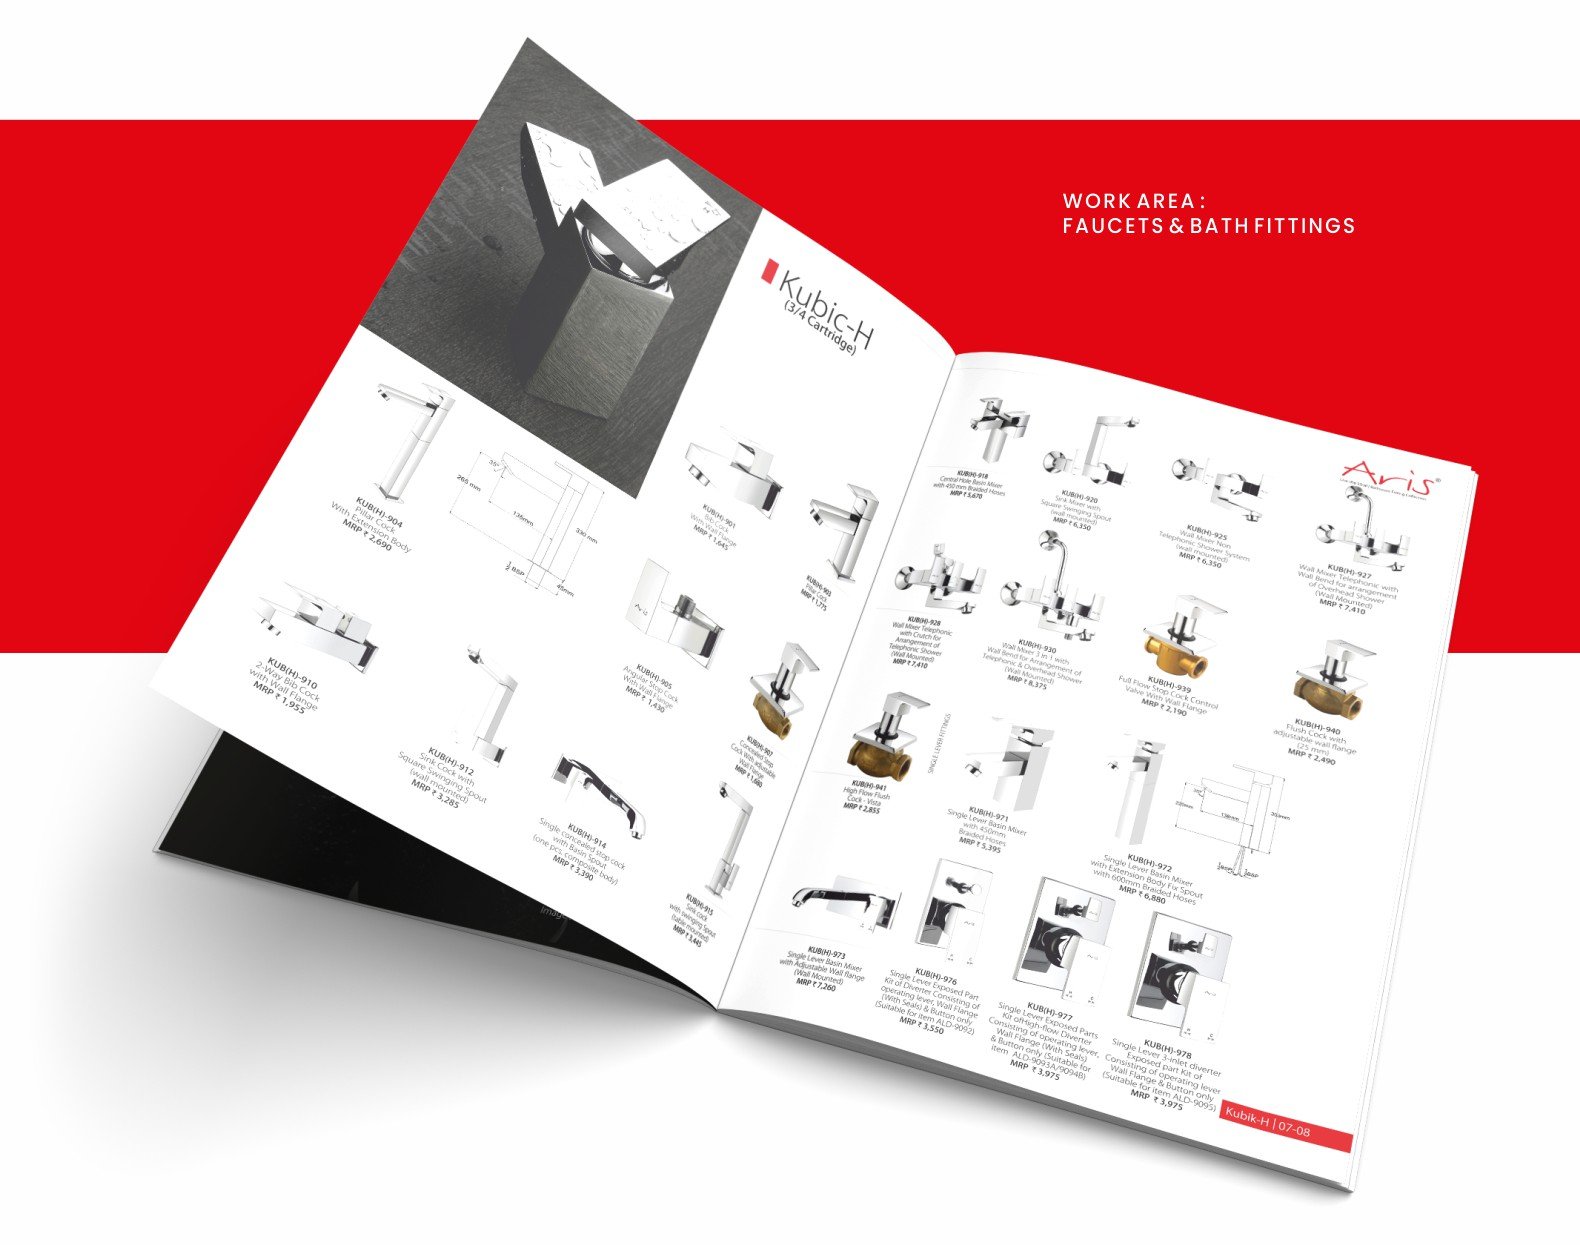 Aris Catalogue Design | Spartan Branding